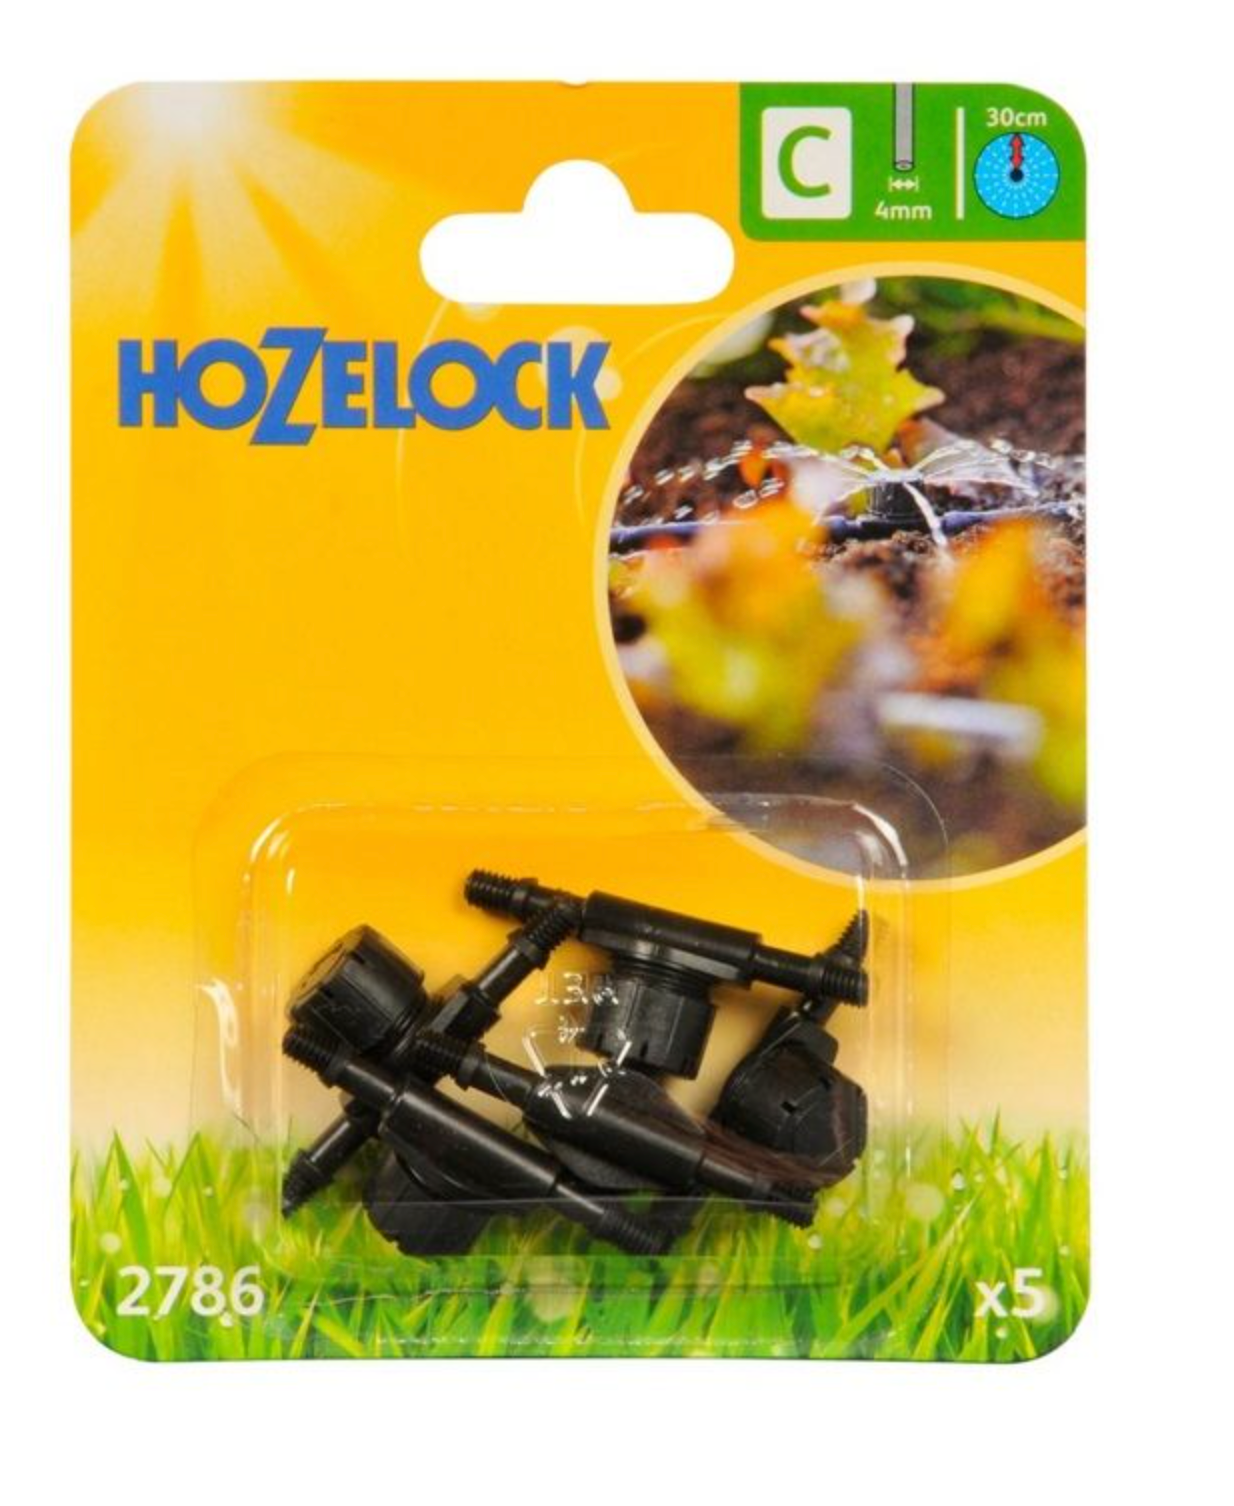 Hozelock 2786 In Line Adjustable Mini Sprinkler 4mm - Pack of 5